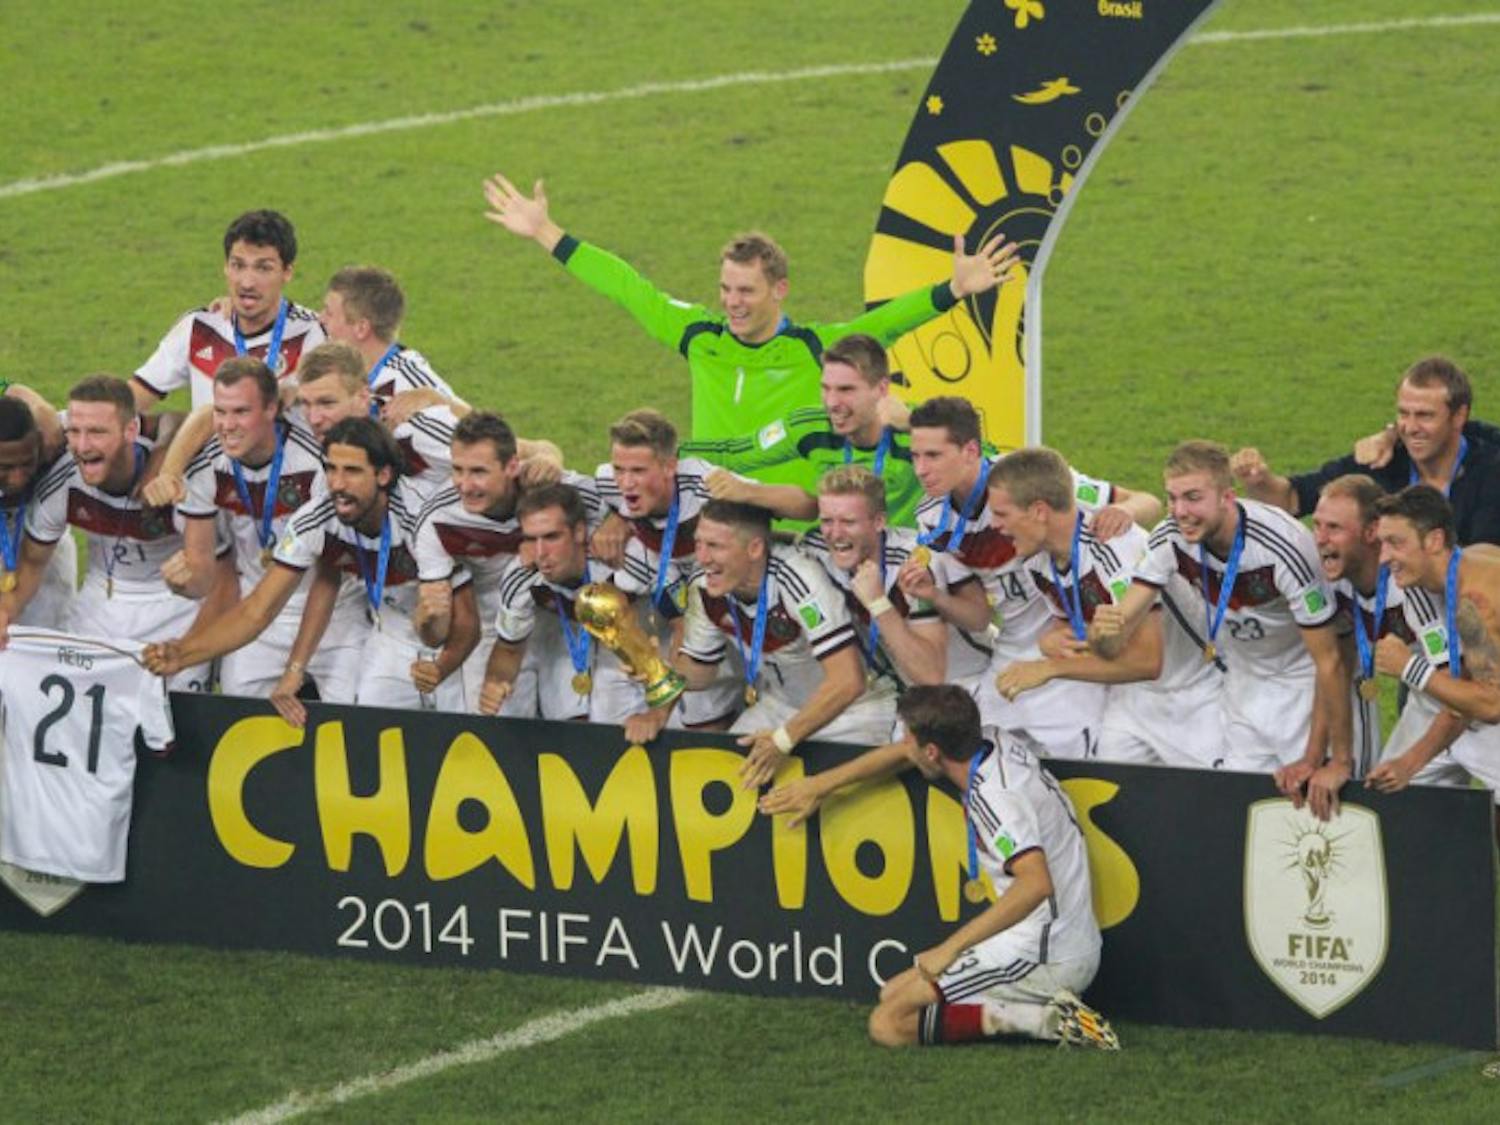 Germany_champions_2014_FIFA_World_Cup-e1479349292832